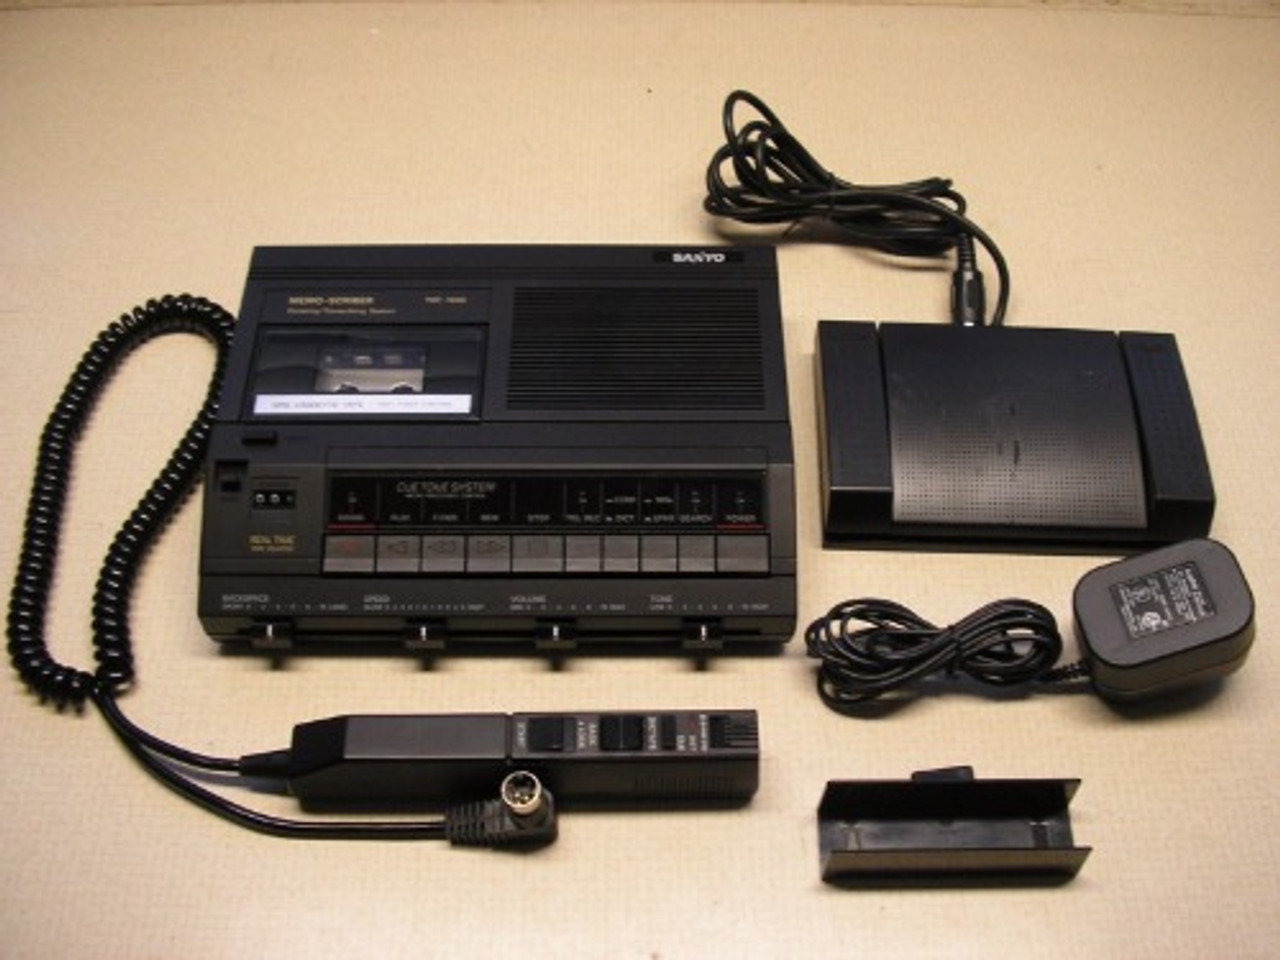 Sanyo Trc 7600 Minicassette Transcription Dictation Machine